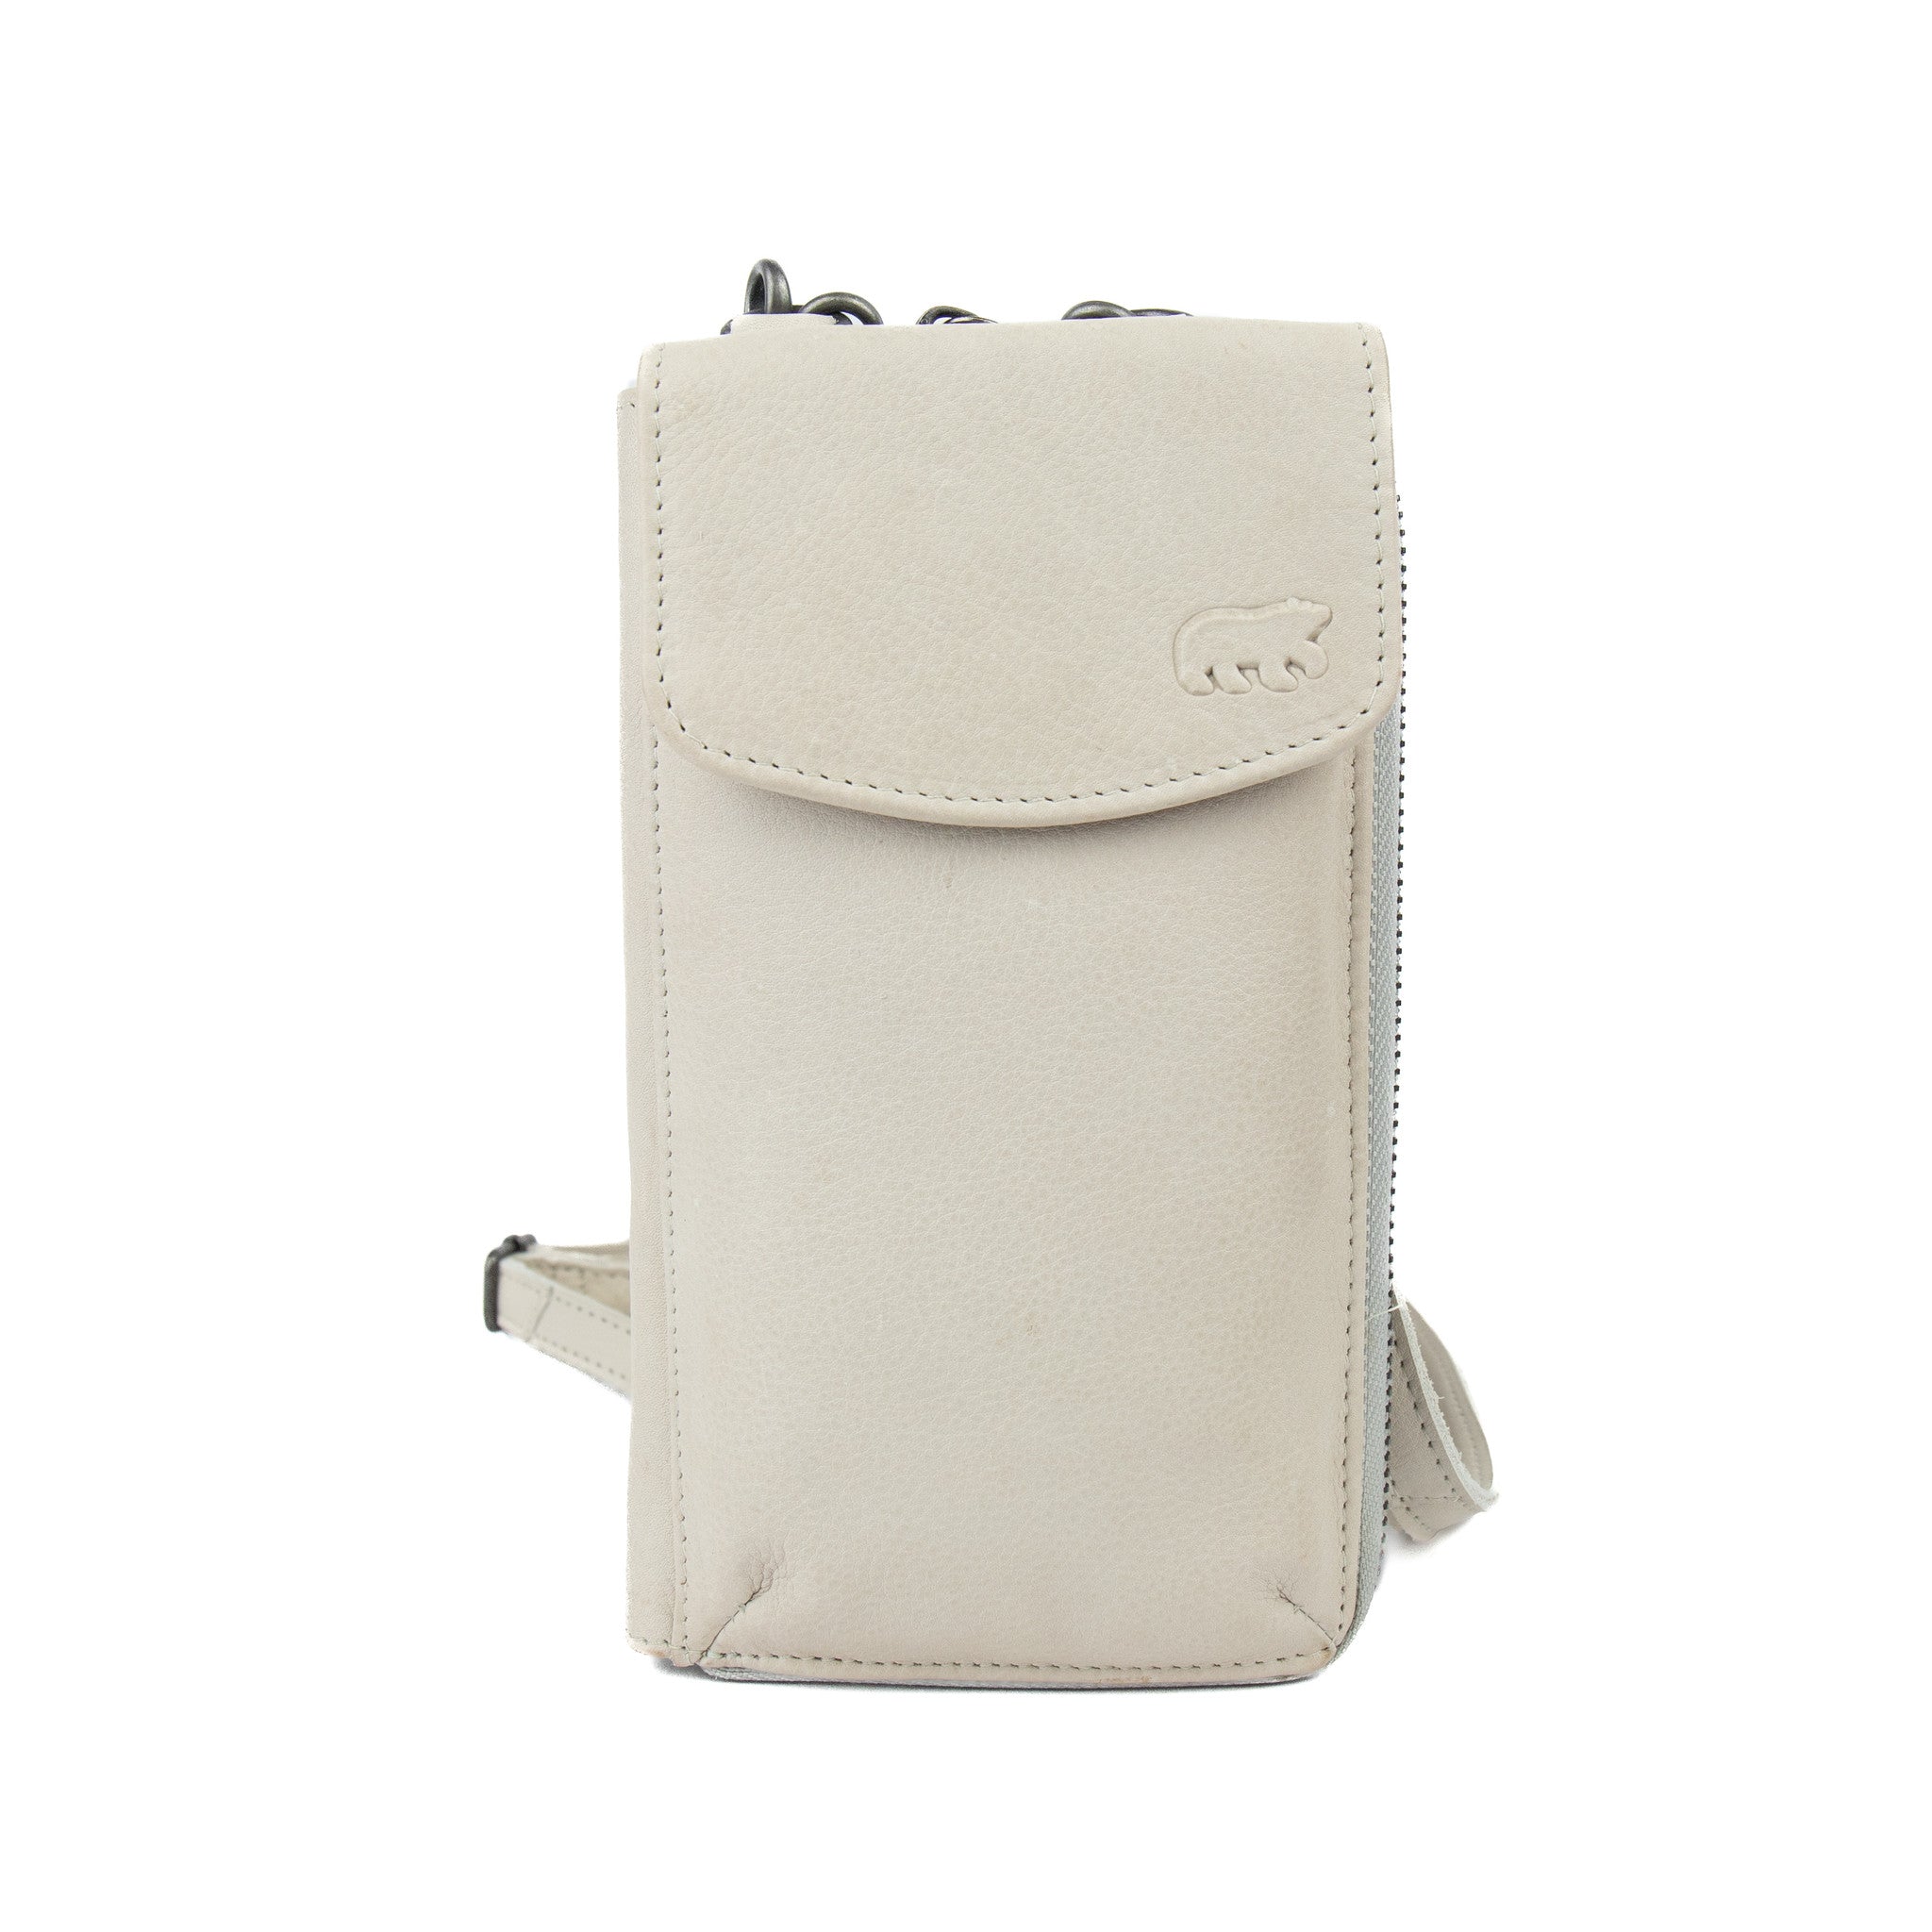 Phone bag 'Zoey' dove - CP 6035